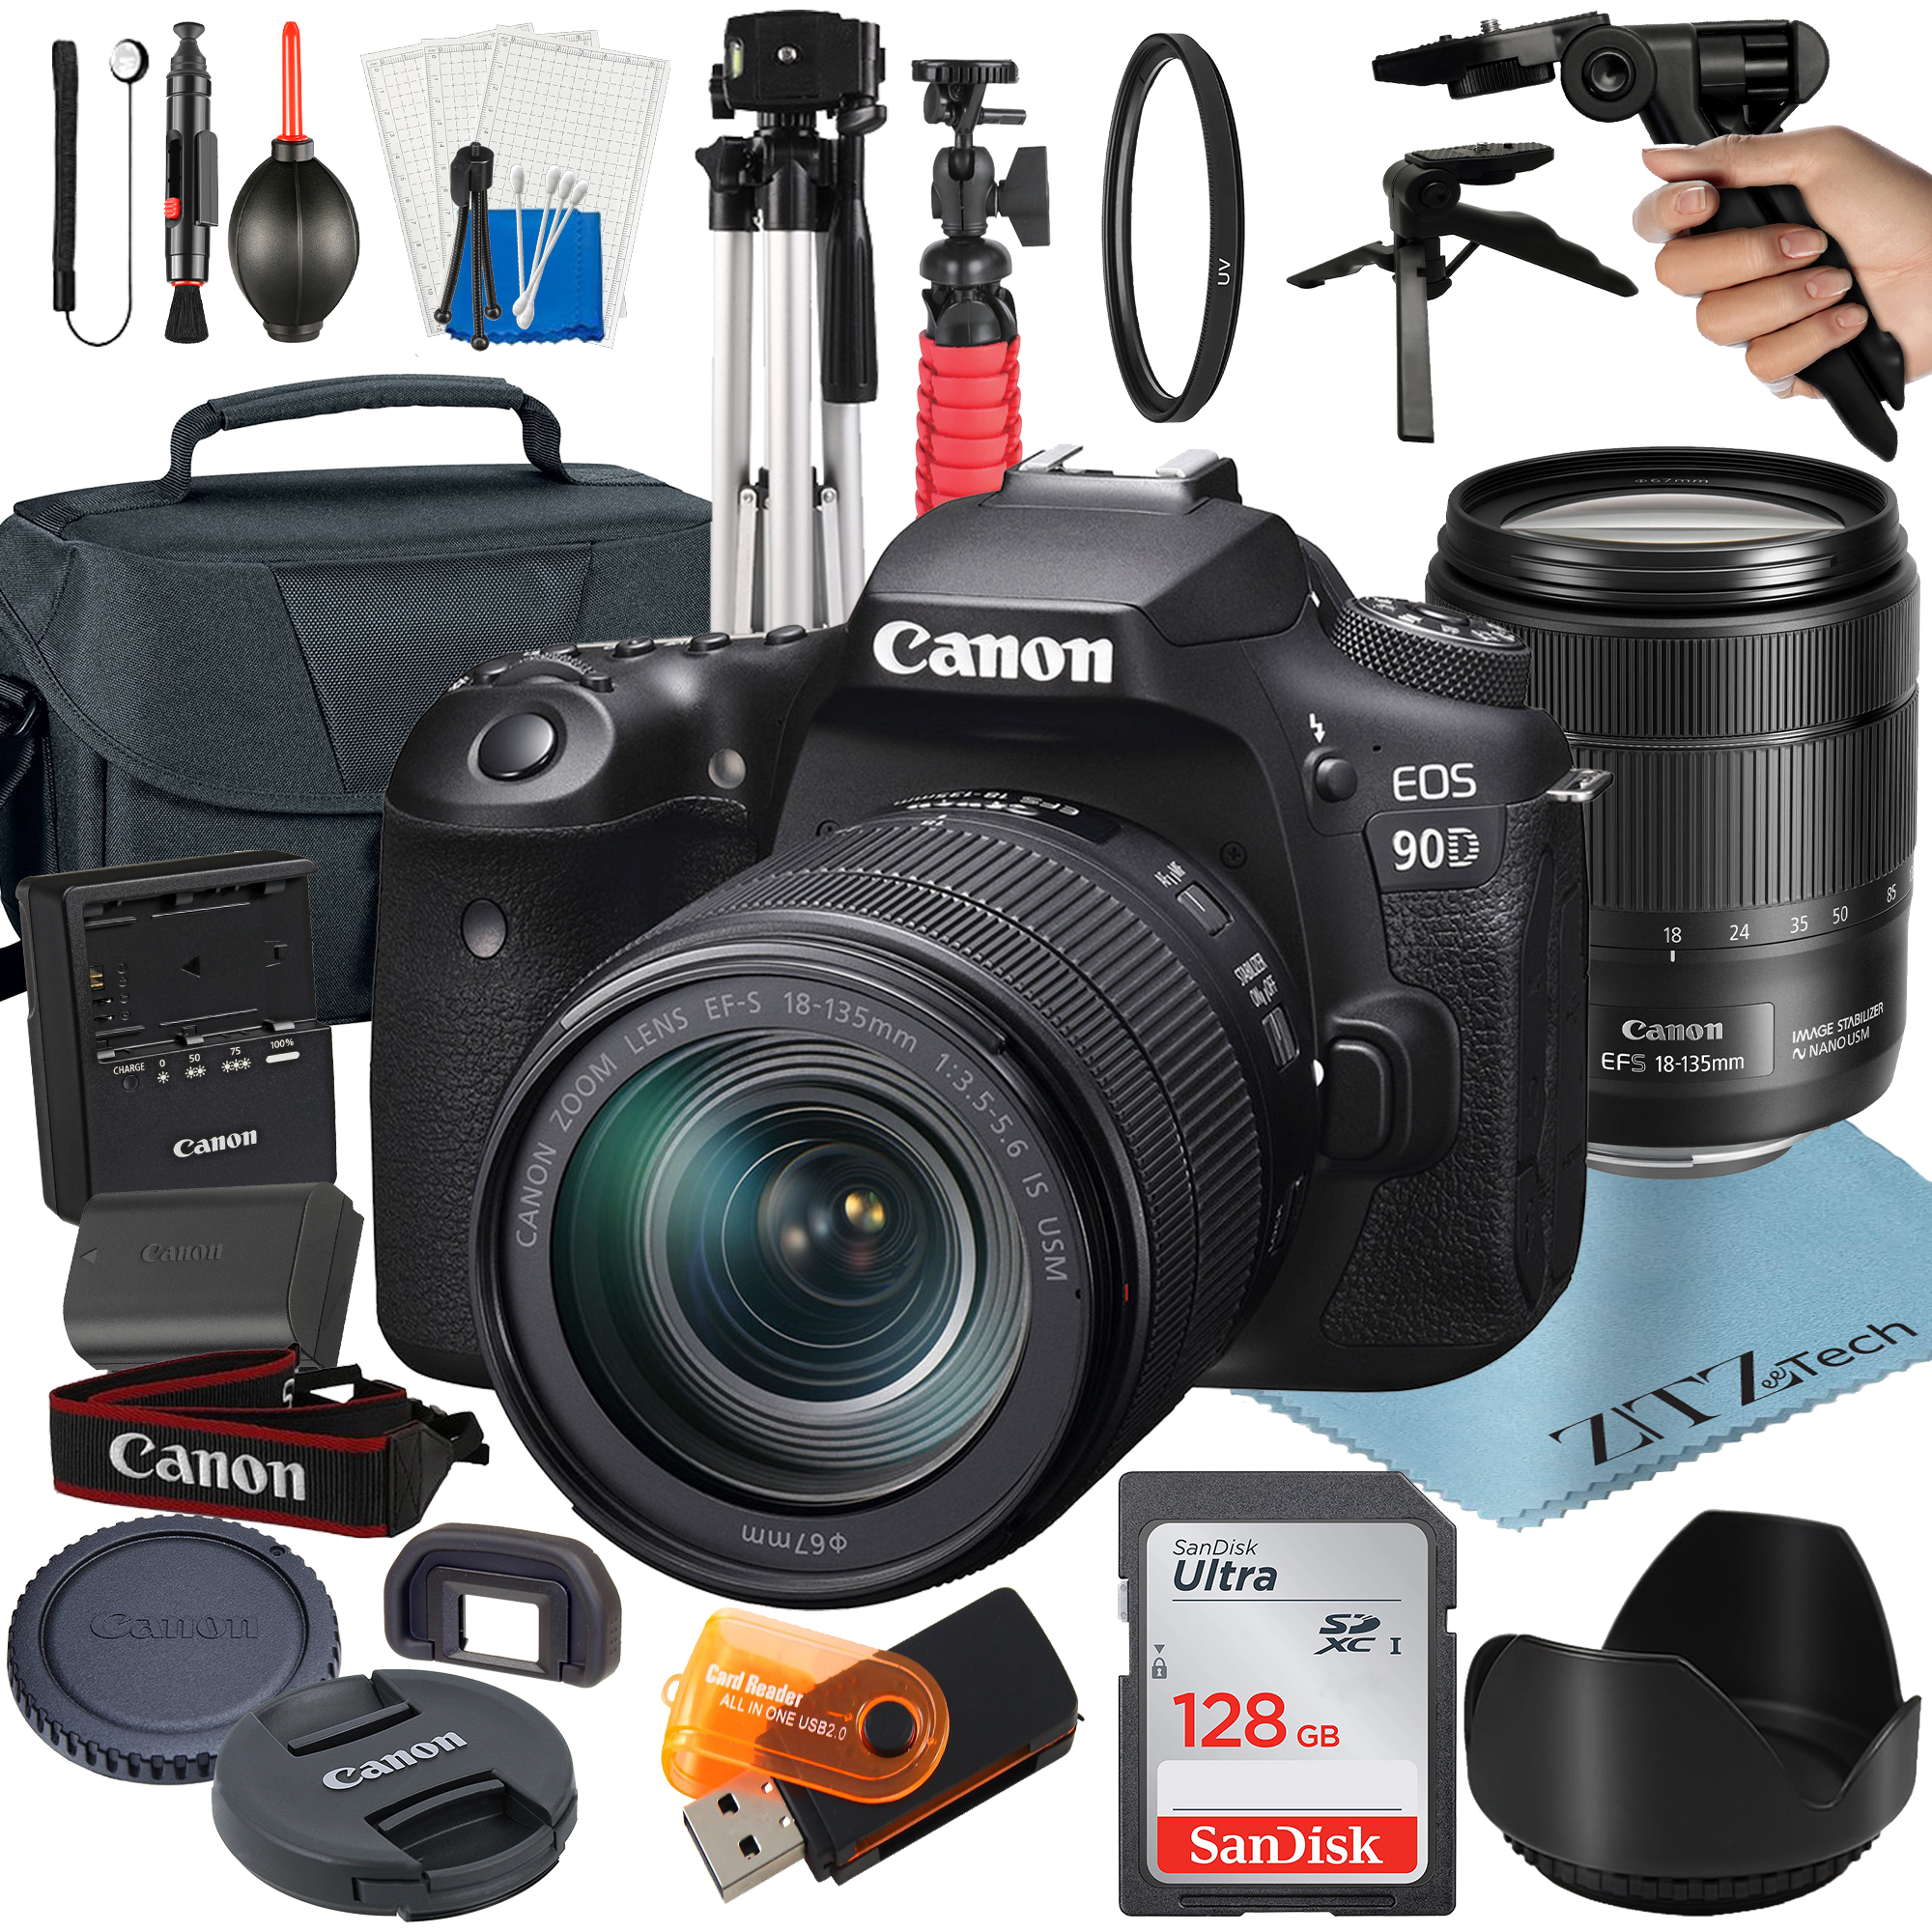 Canon EOS 90D DSLR Camera Bundle with 18-135mm Lens + 128GB SanDisk Card + Case + Tripod + ZeeTech Accessory